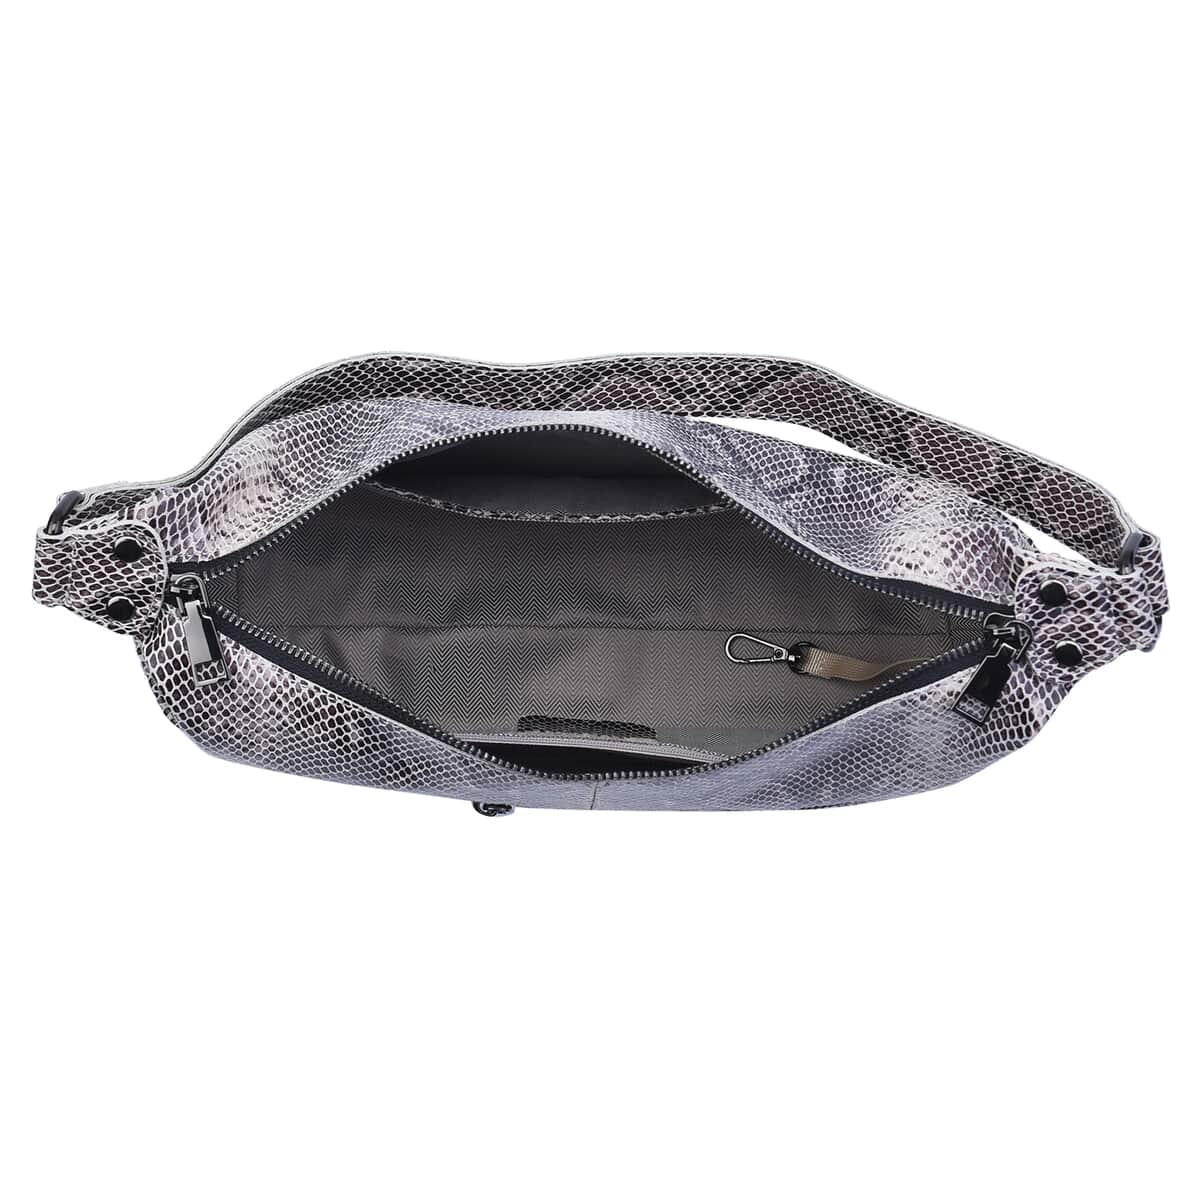 Gray Python Embossed Print Genuine Leather Hobo Bag with Shoulder Straps image number 5